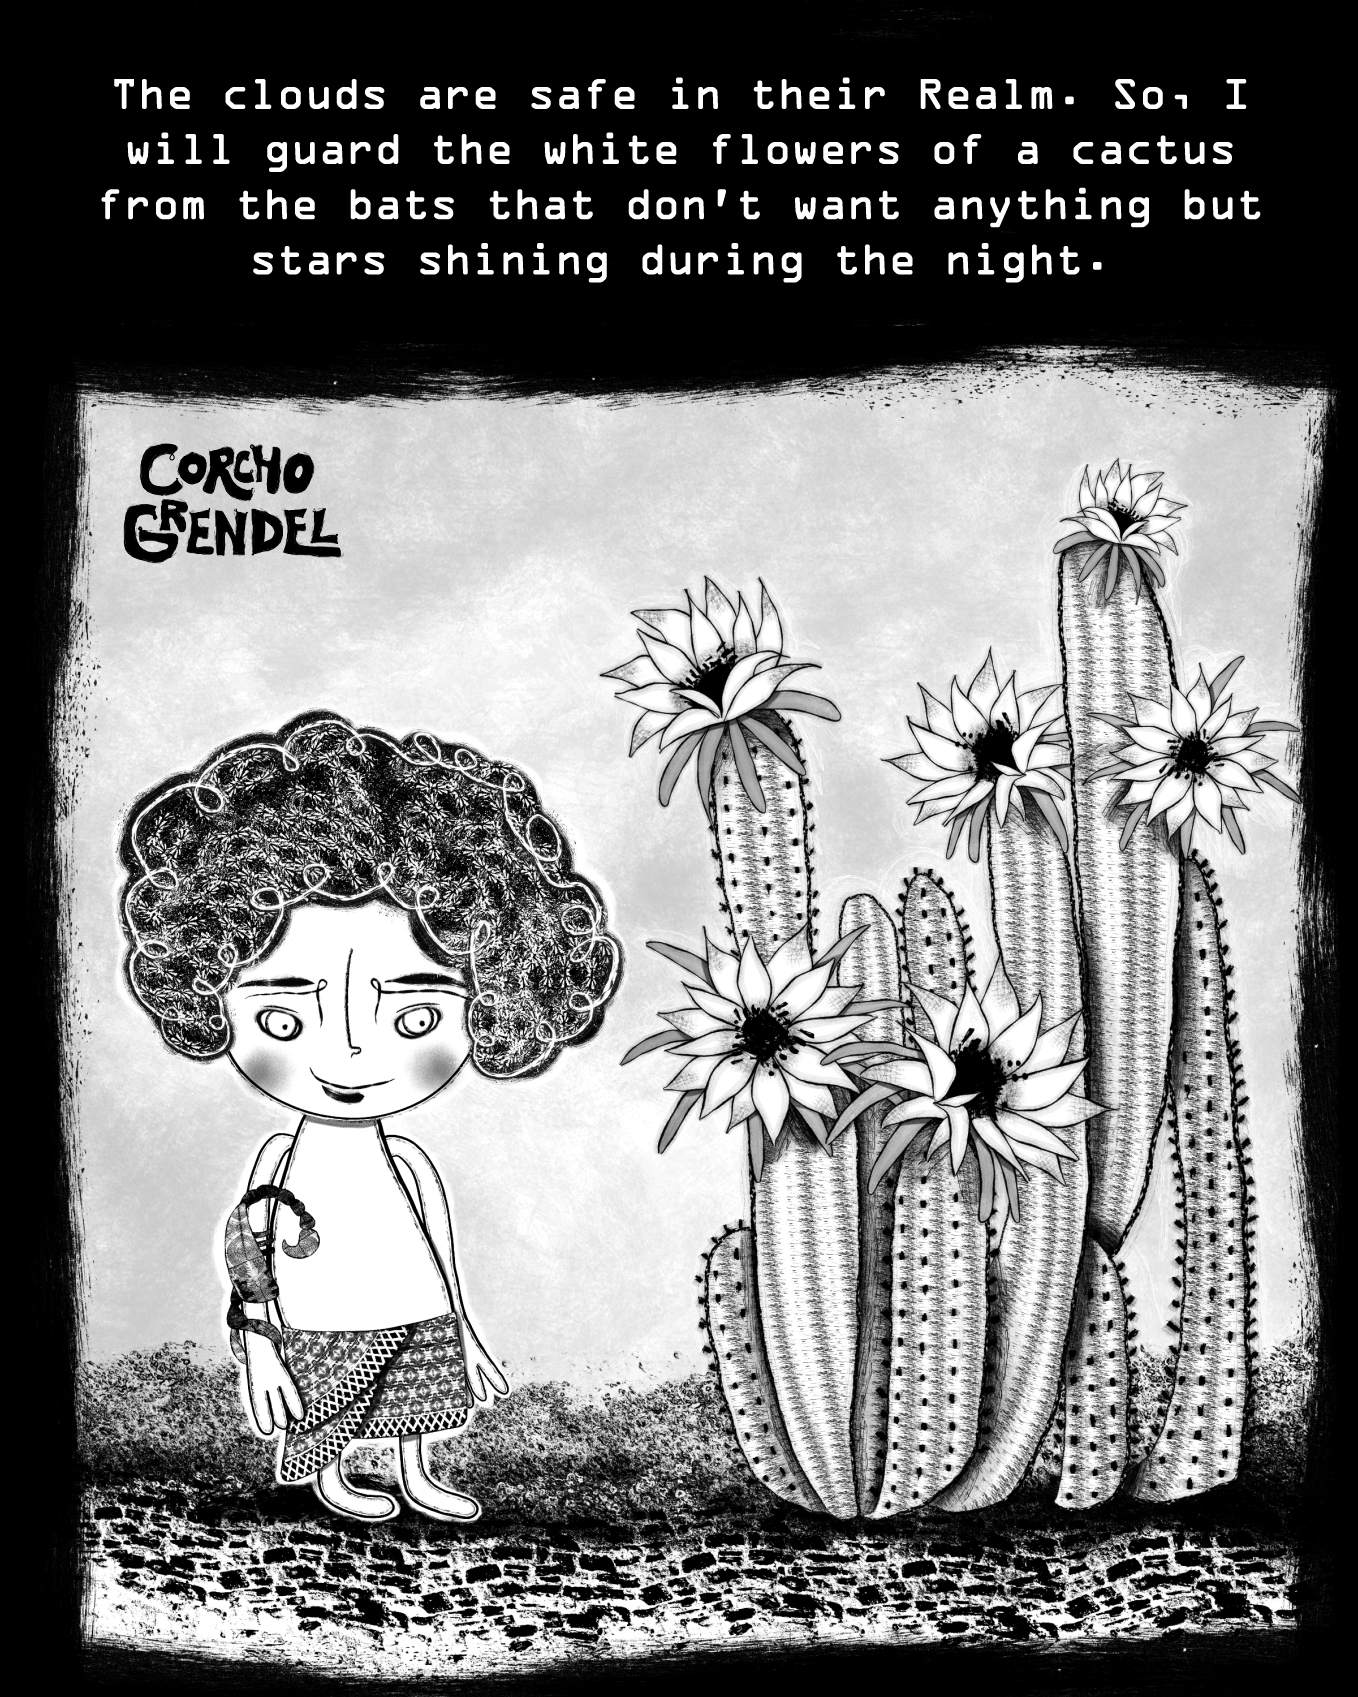 CorchoGrendel-Meteo-11-Nubes-05-cactus